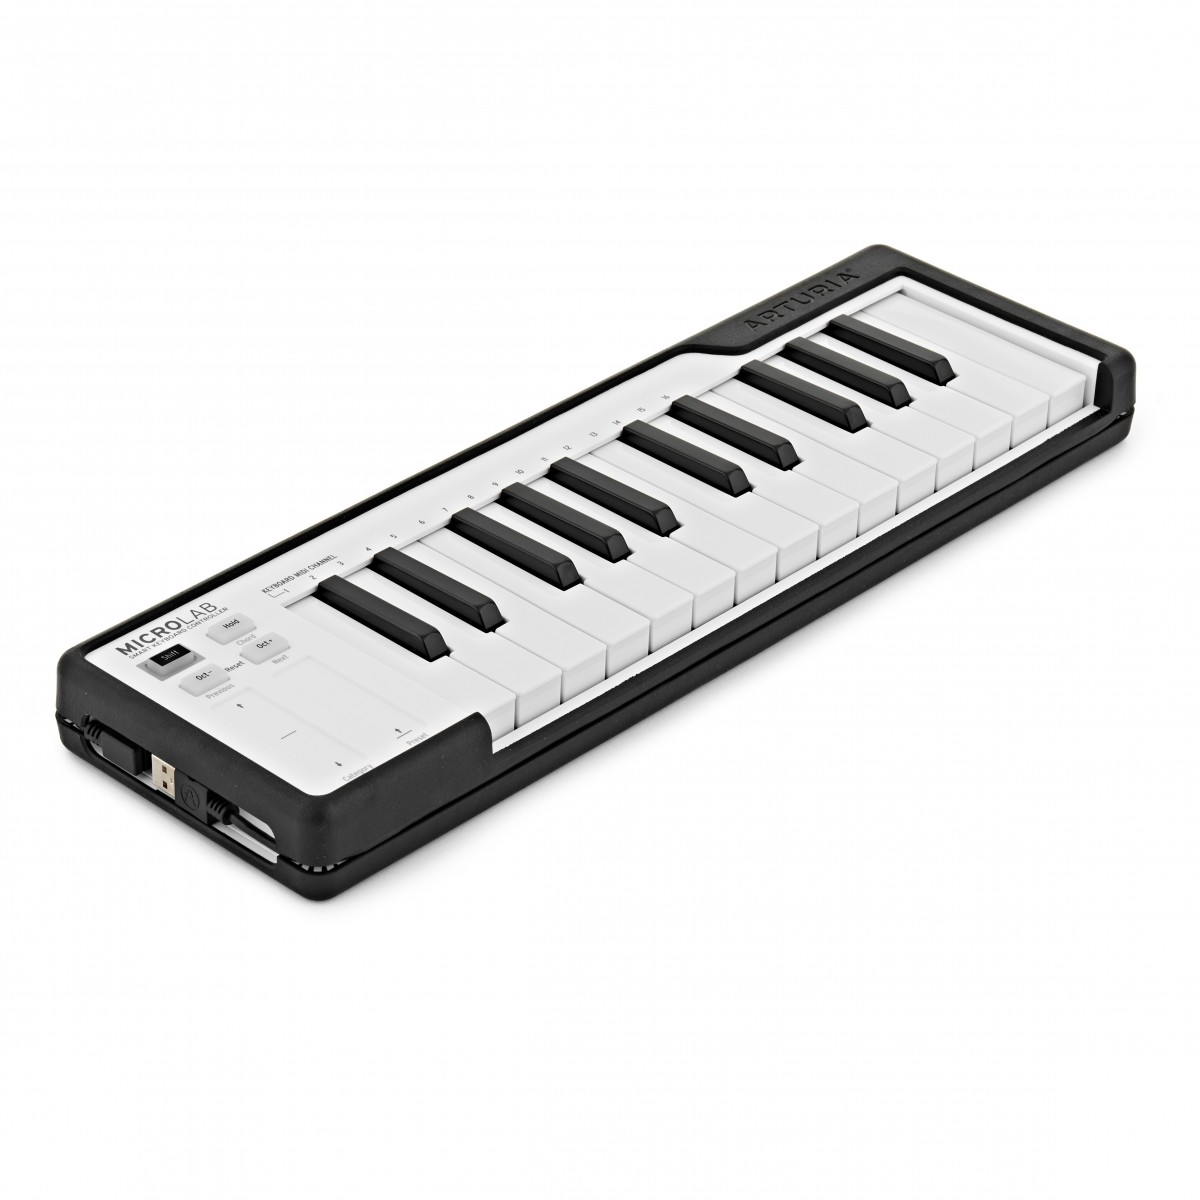 MIDI клавиатура Arturia Microlab Black